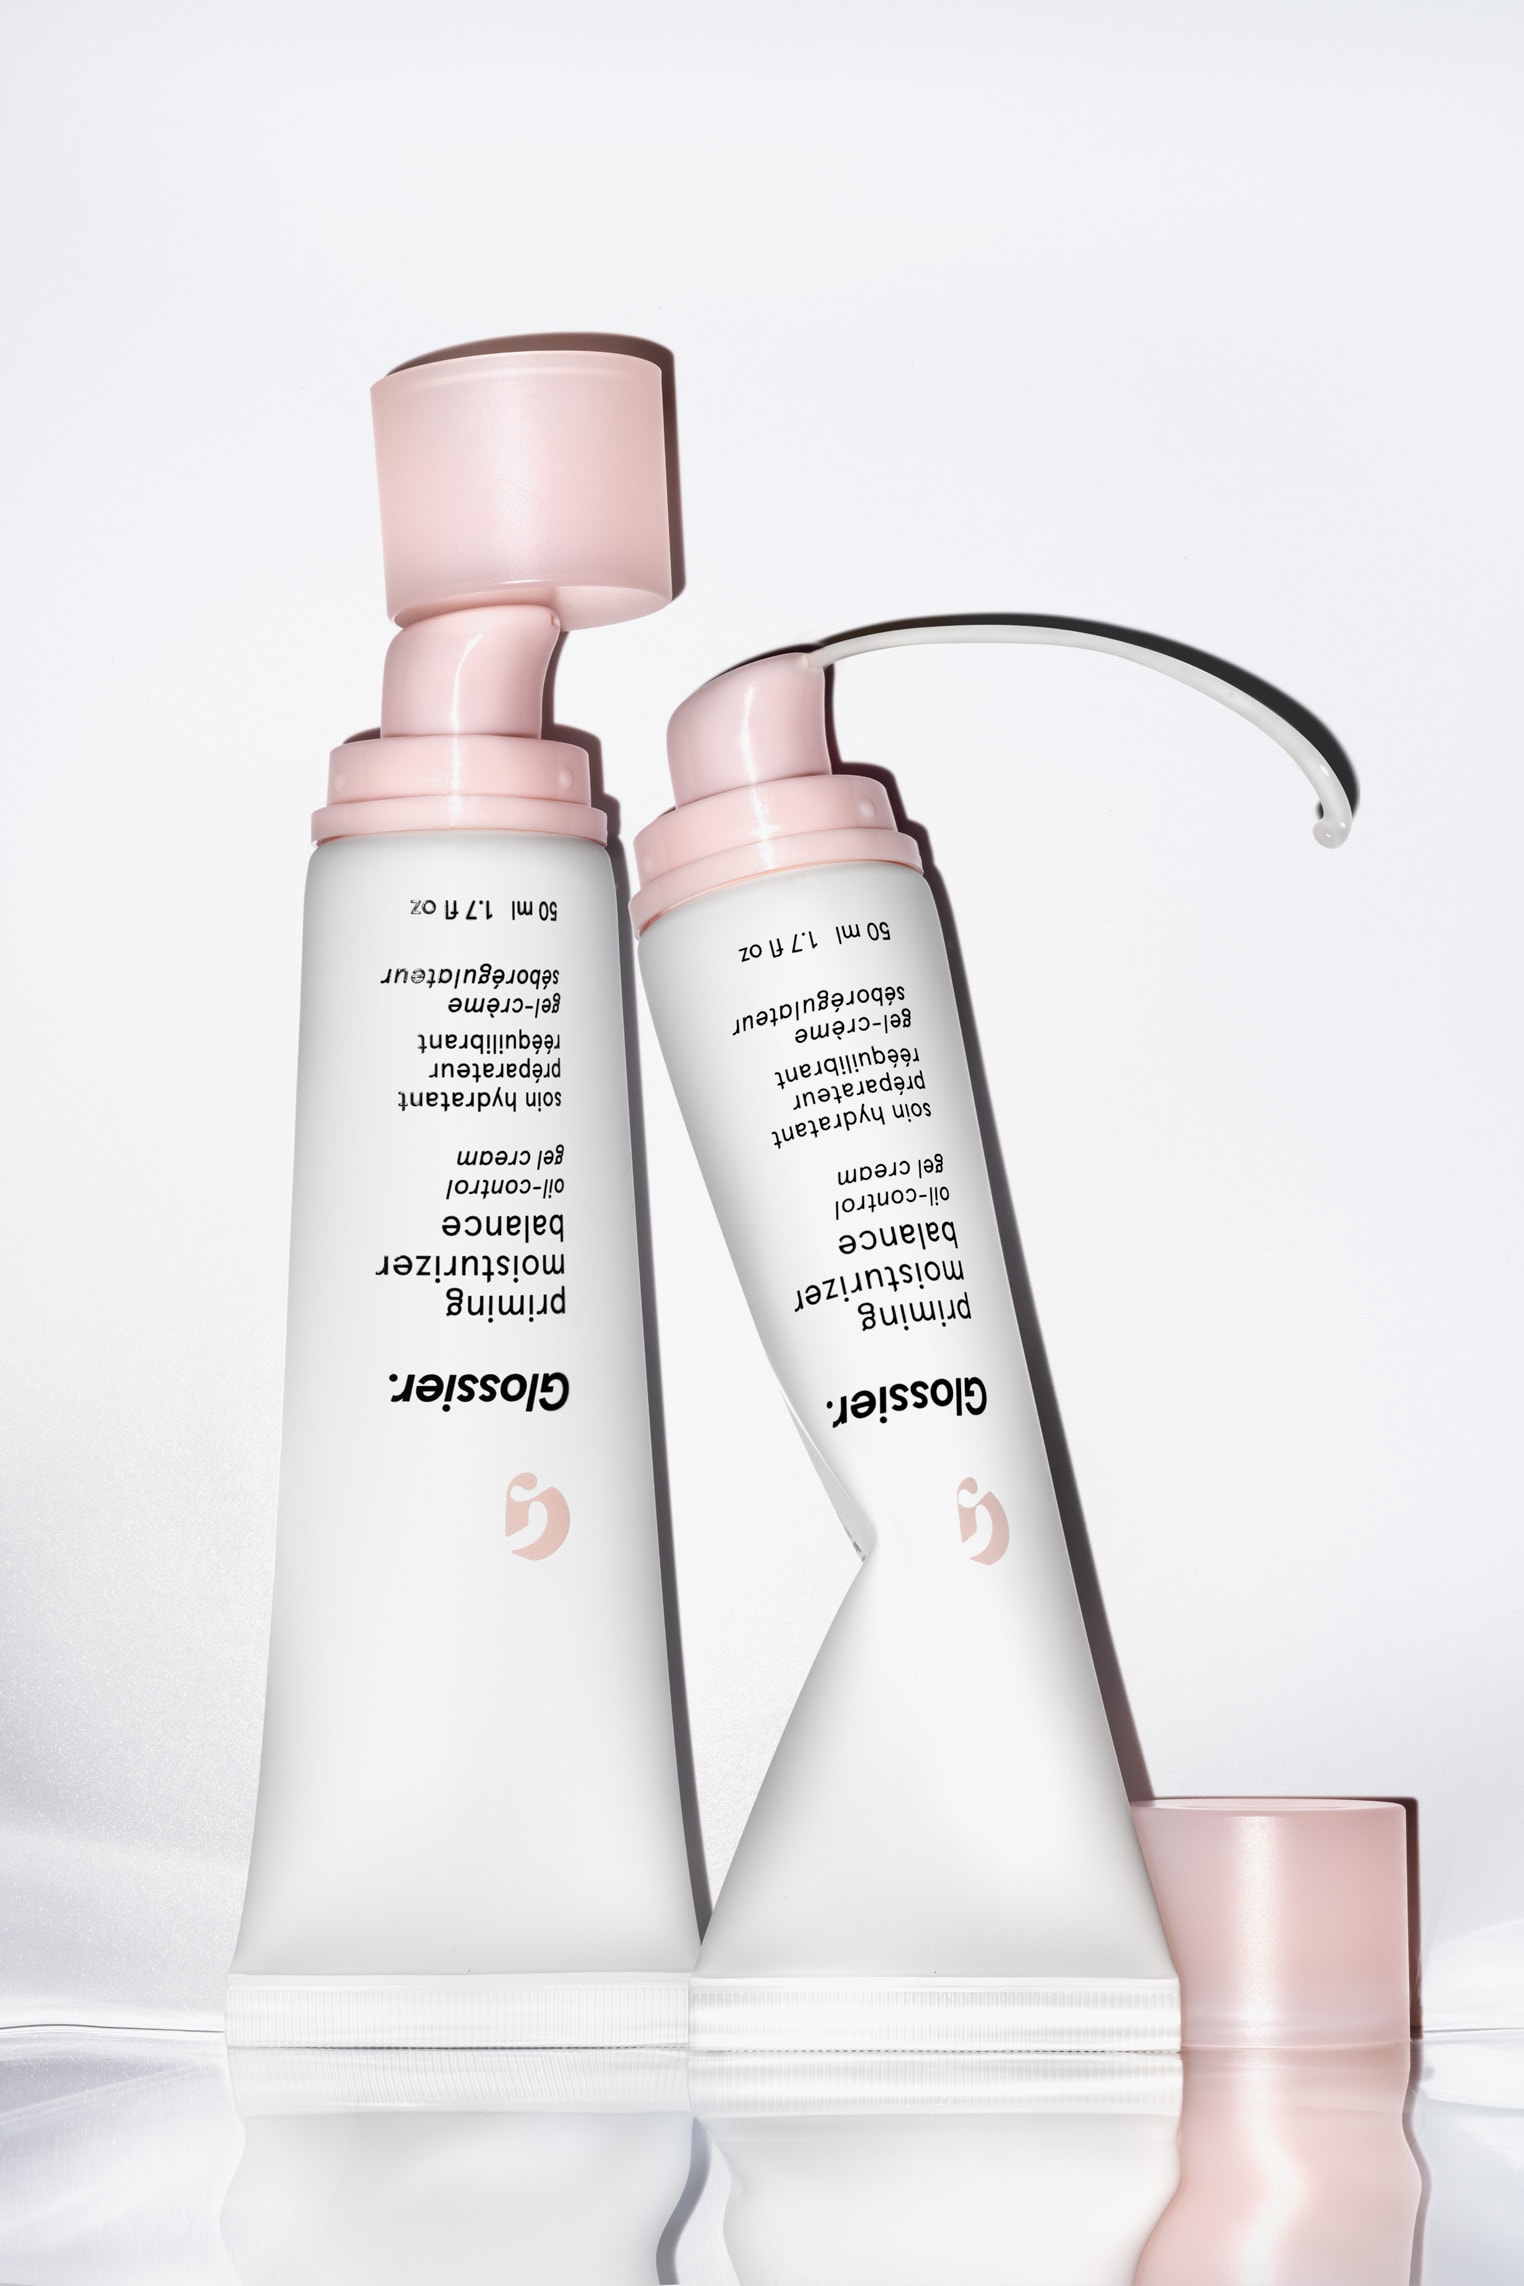 Glossier Priming Moisturizer Balance Release Product Oil Control Gel Cream Skincare Beauty